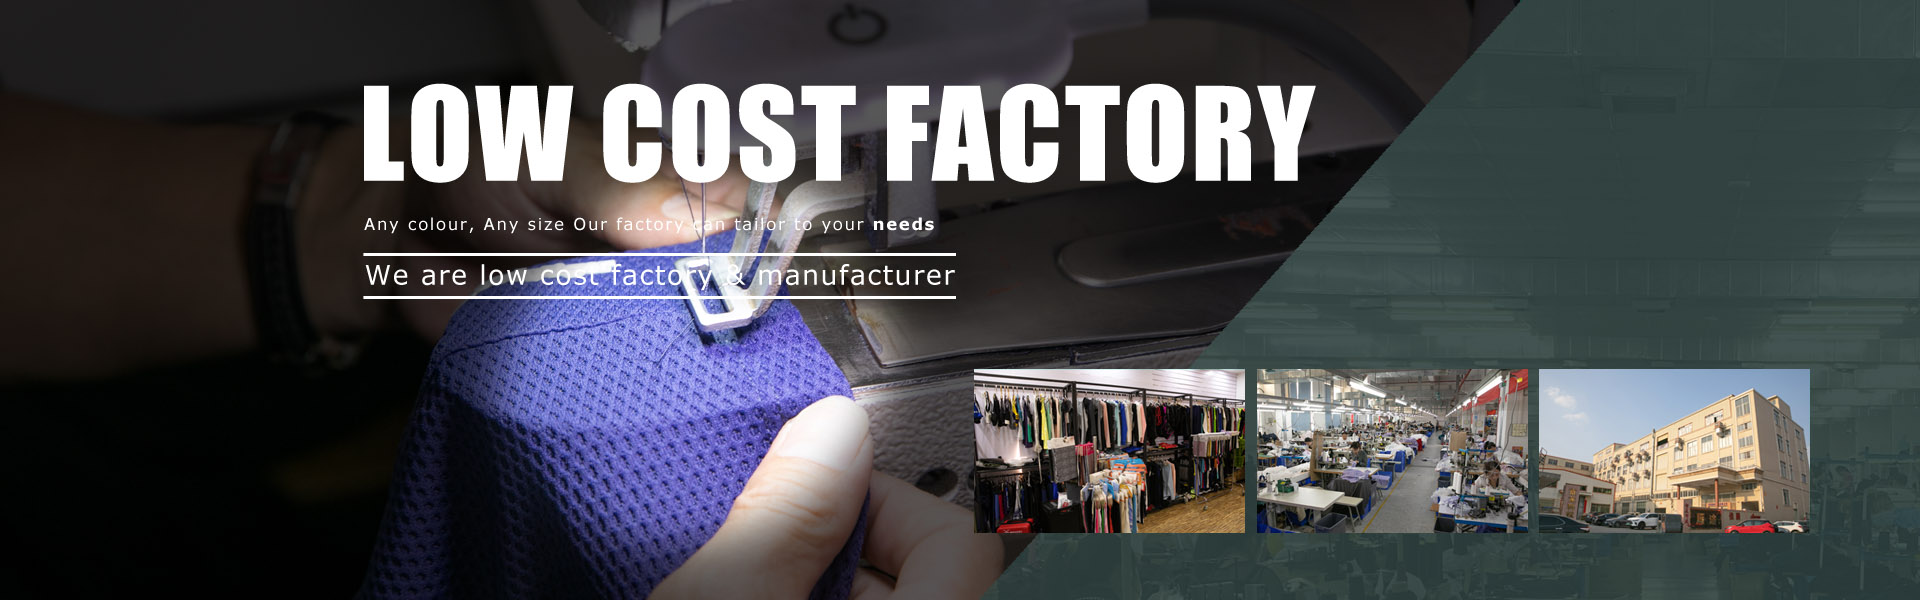 yaga clothes factory